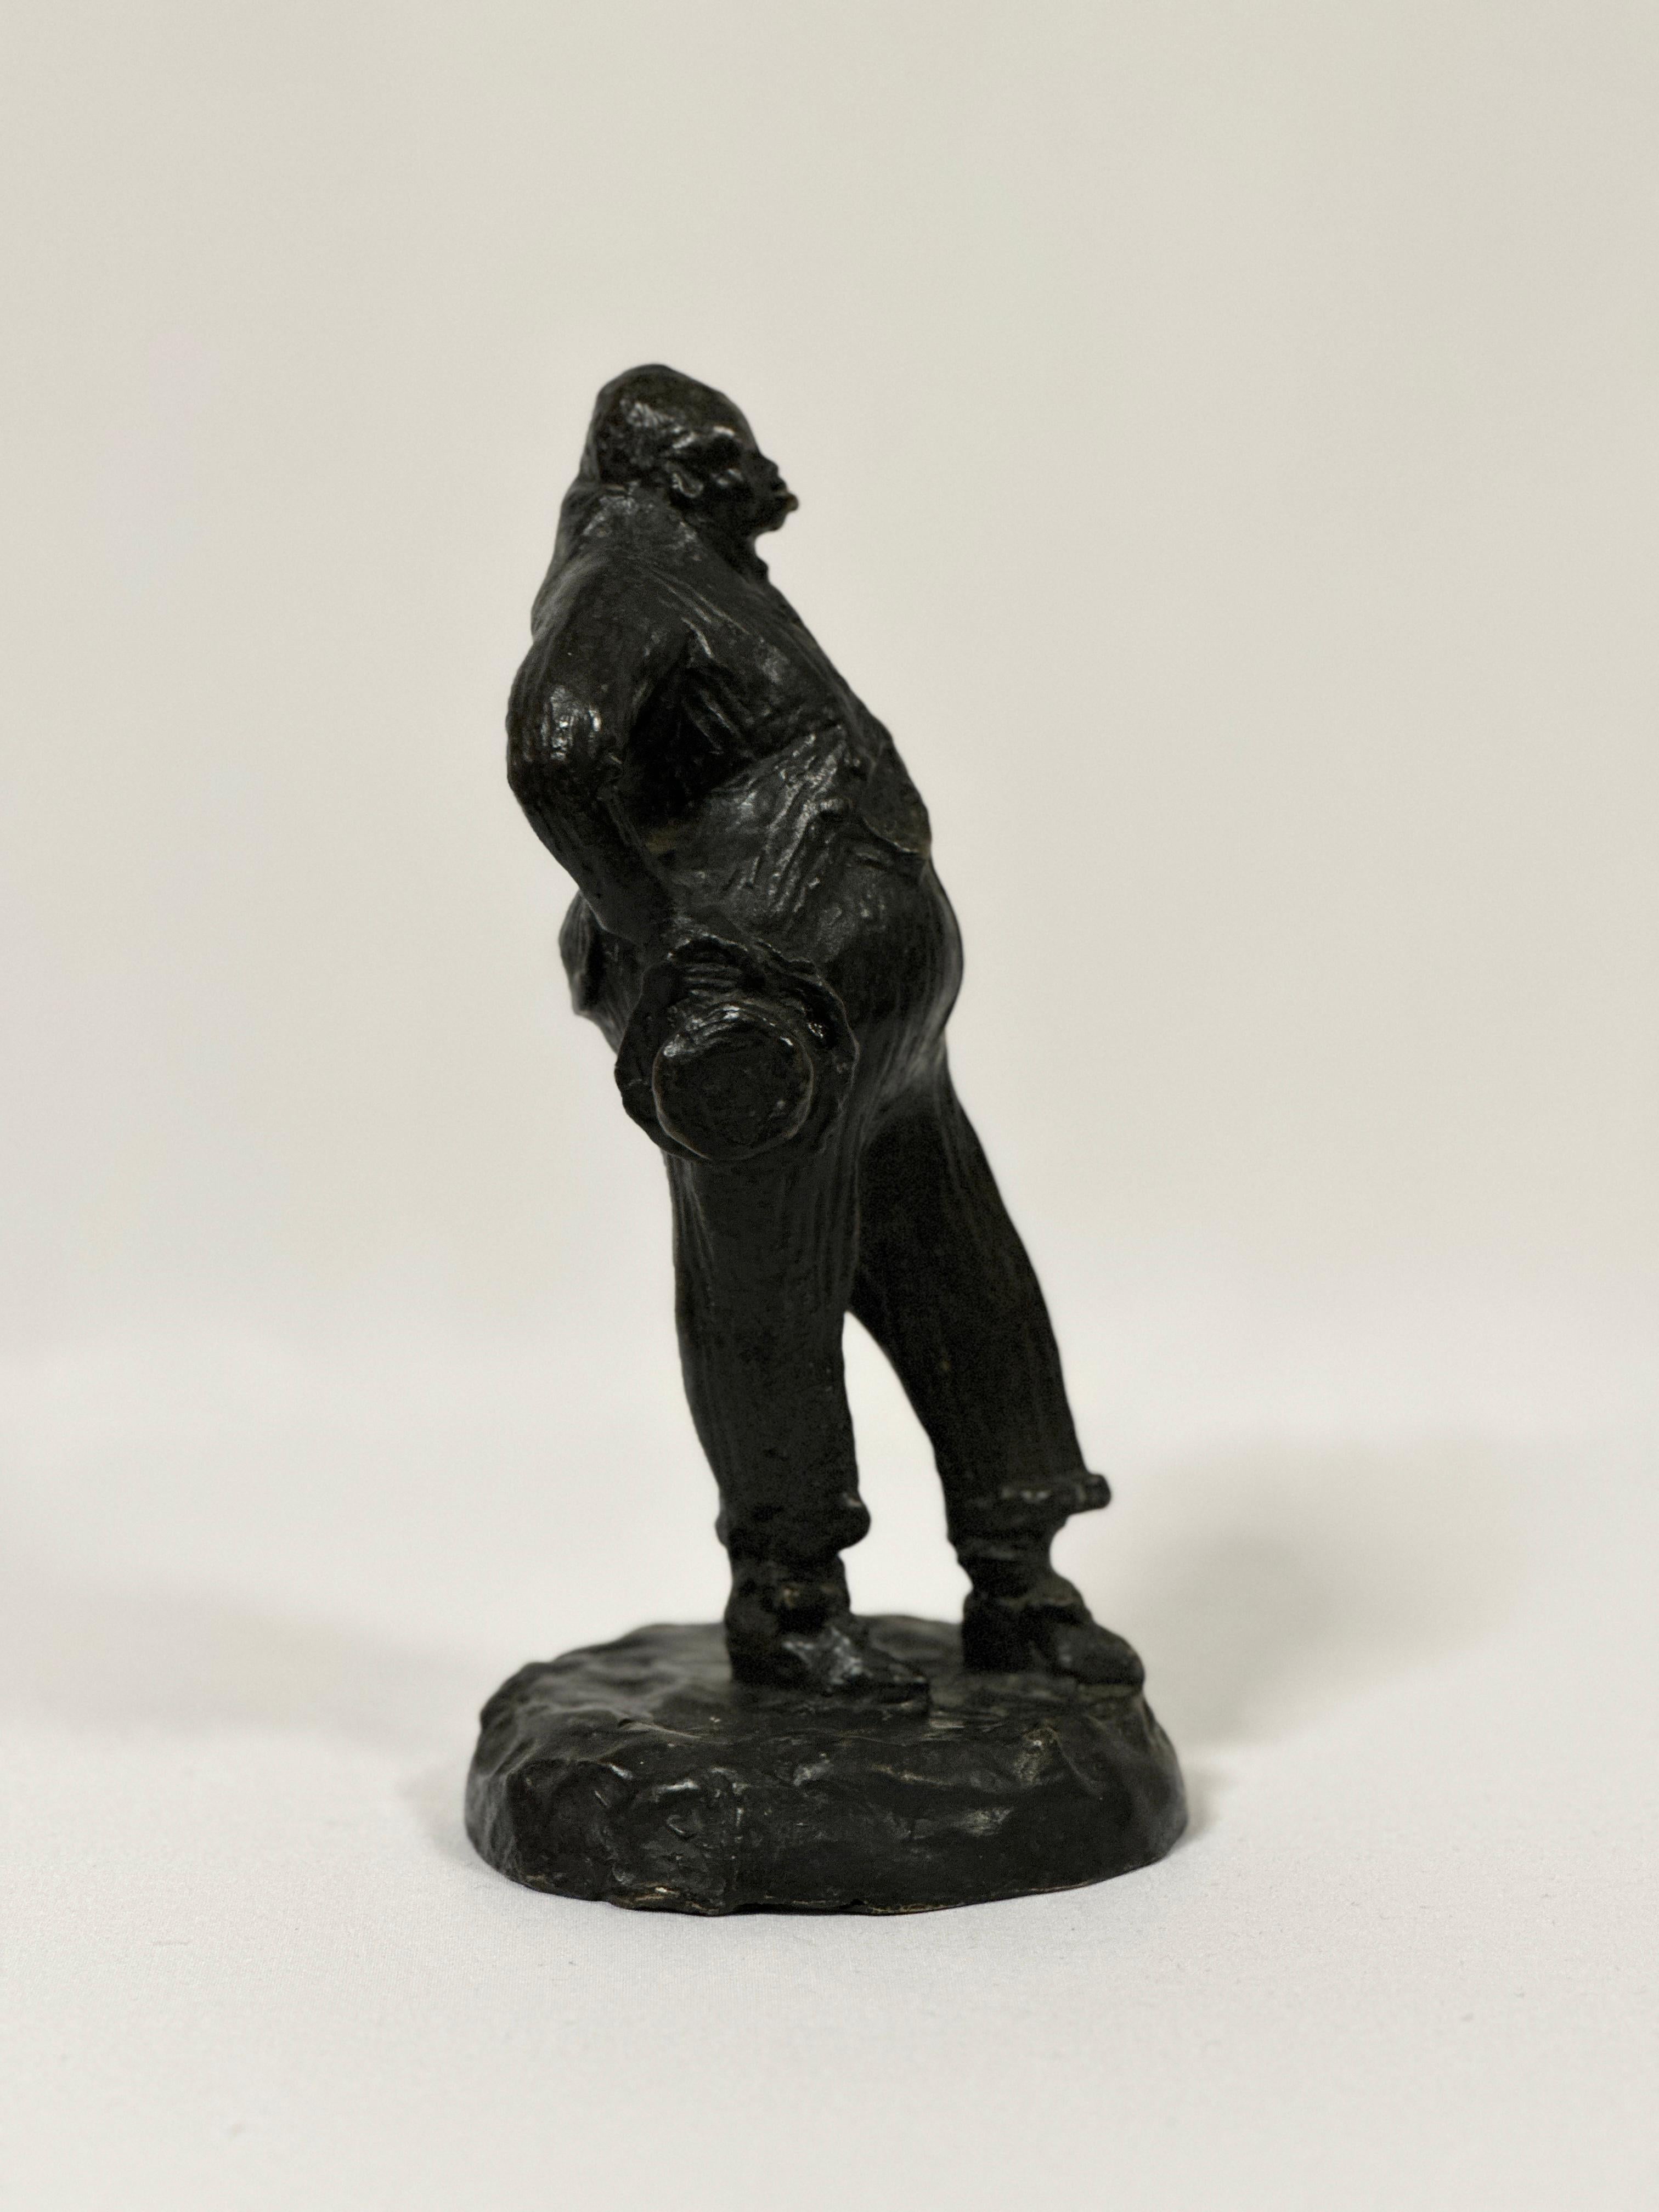 The Gambler, Joe Johnson - Sculpture by Ethel May Klinck Myers